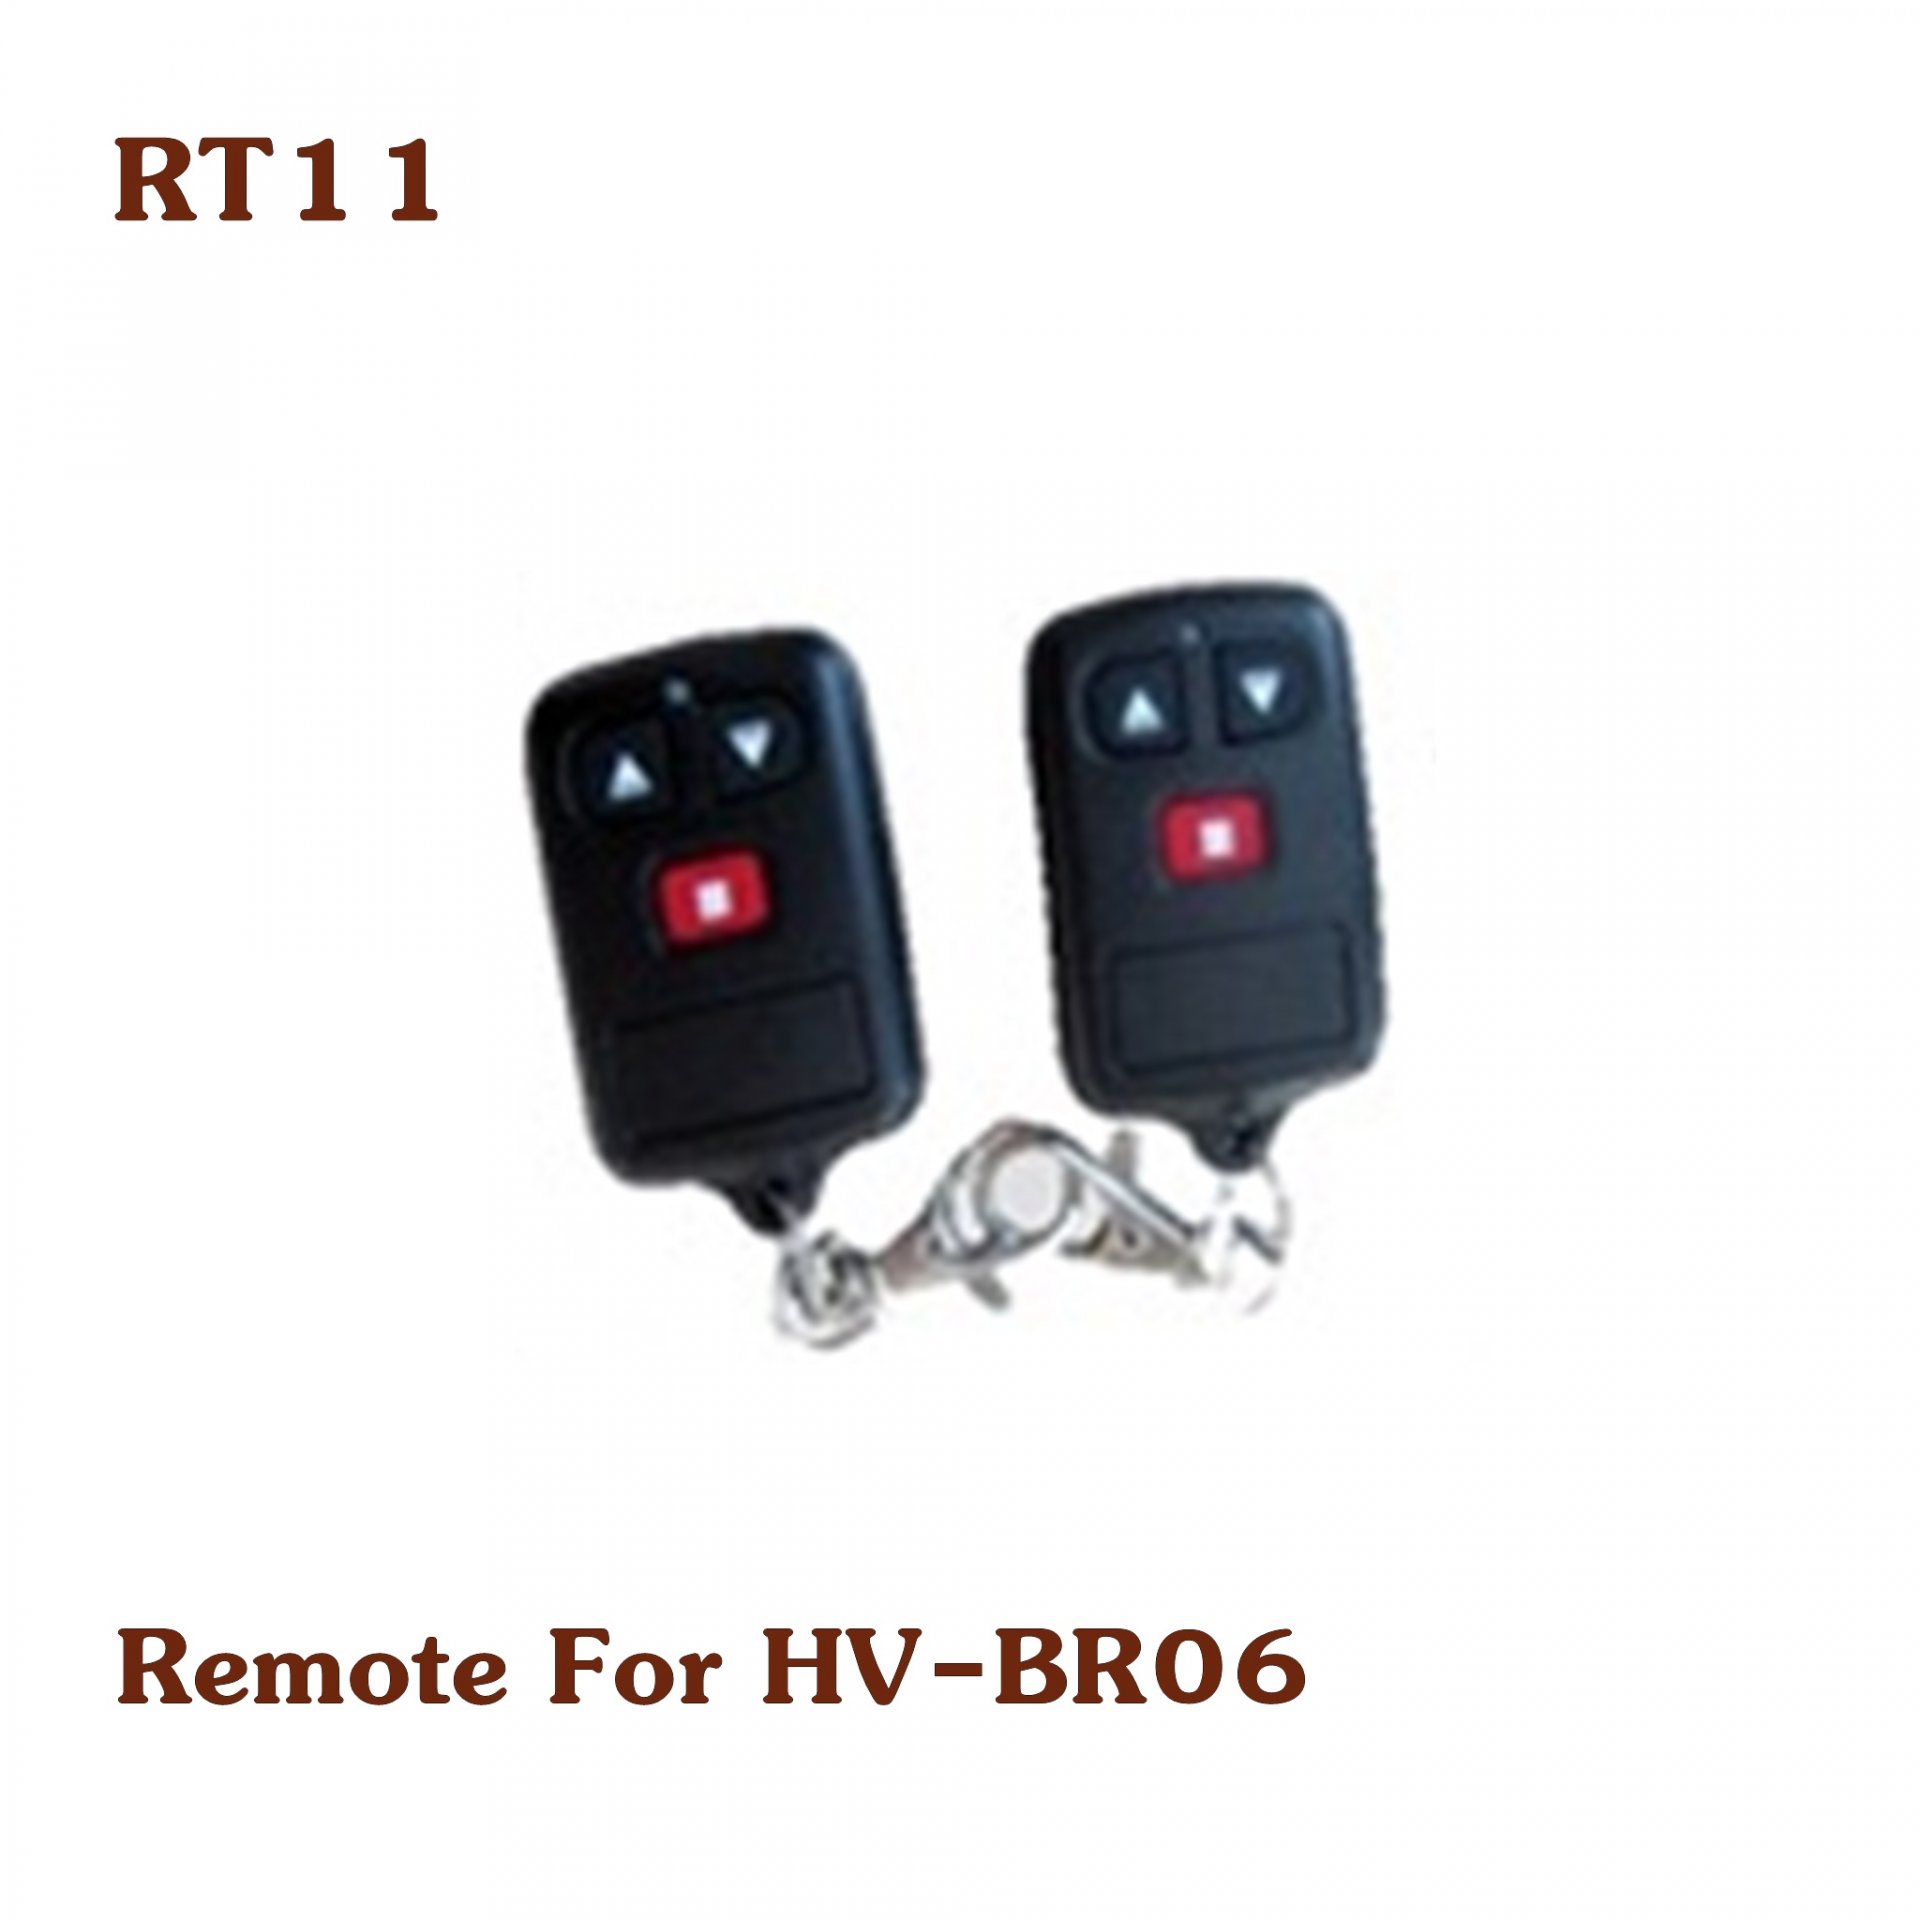 RT11 Remote for HV-BR06